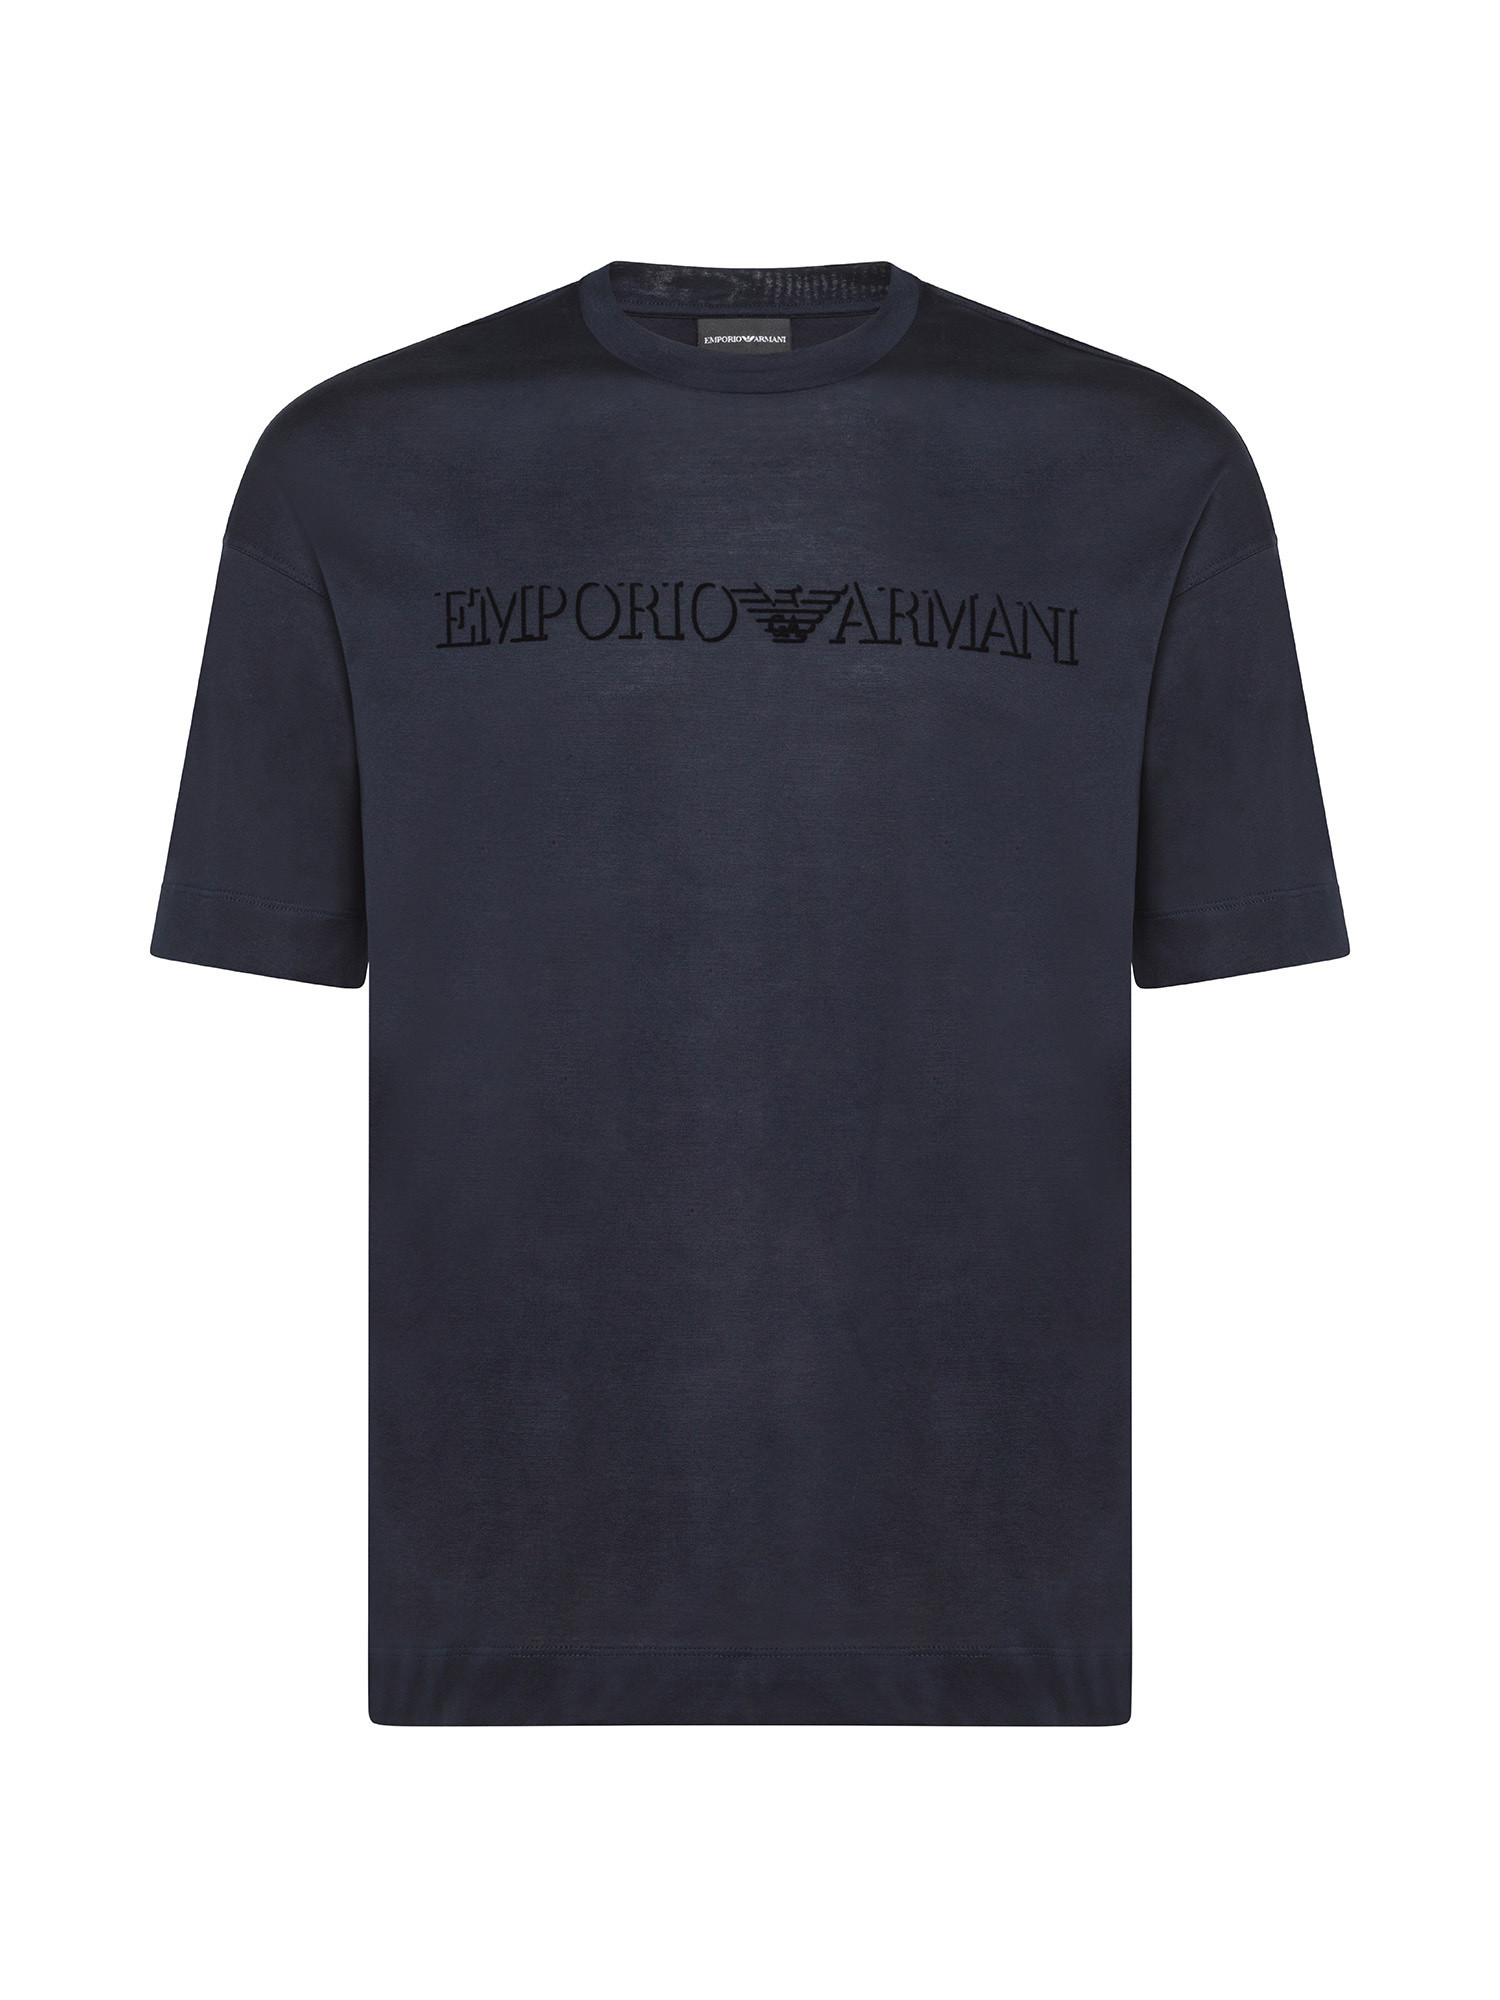 Emporio Armani - Mercerized jersey T-shirt with flock logo, Dark Blue, large image number 0